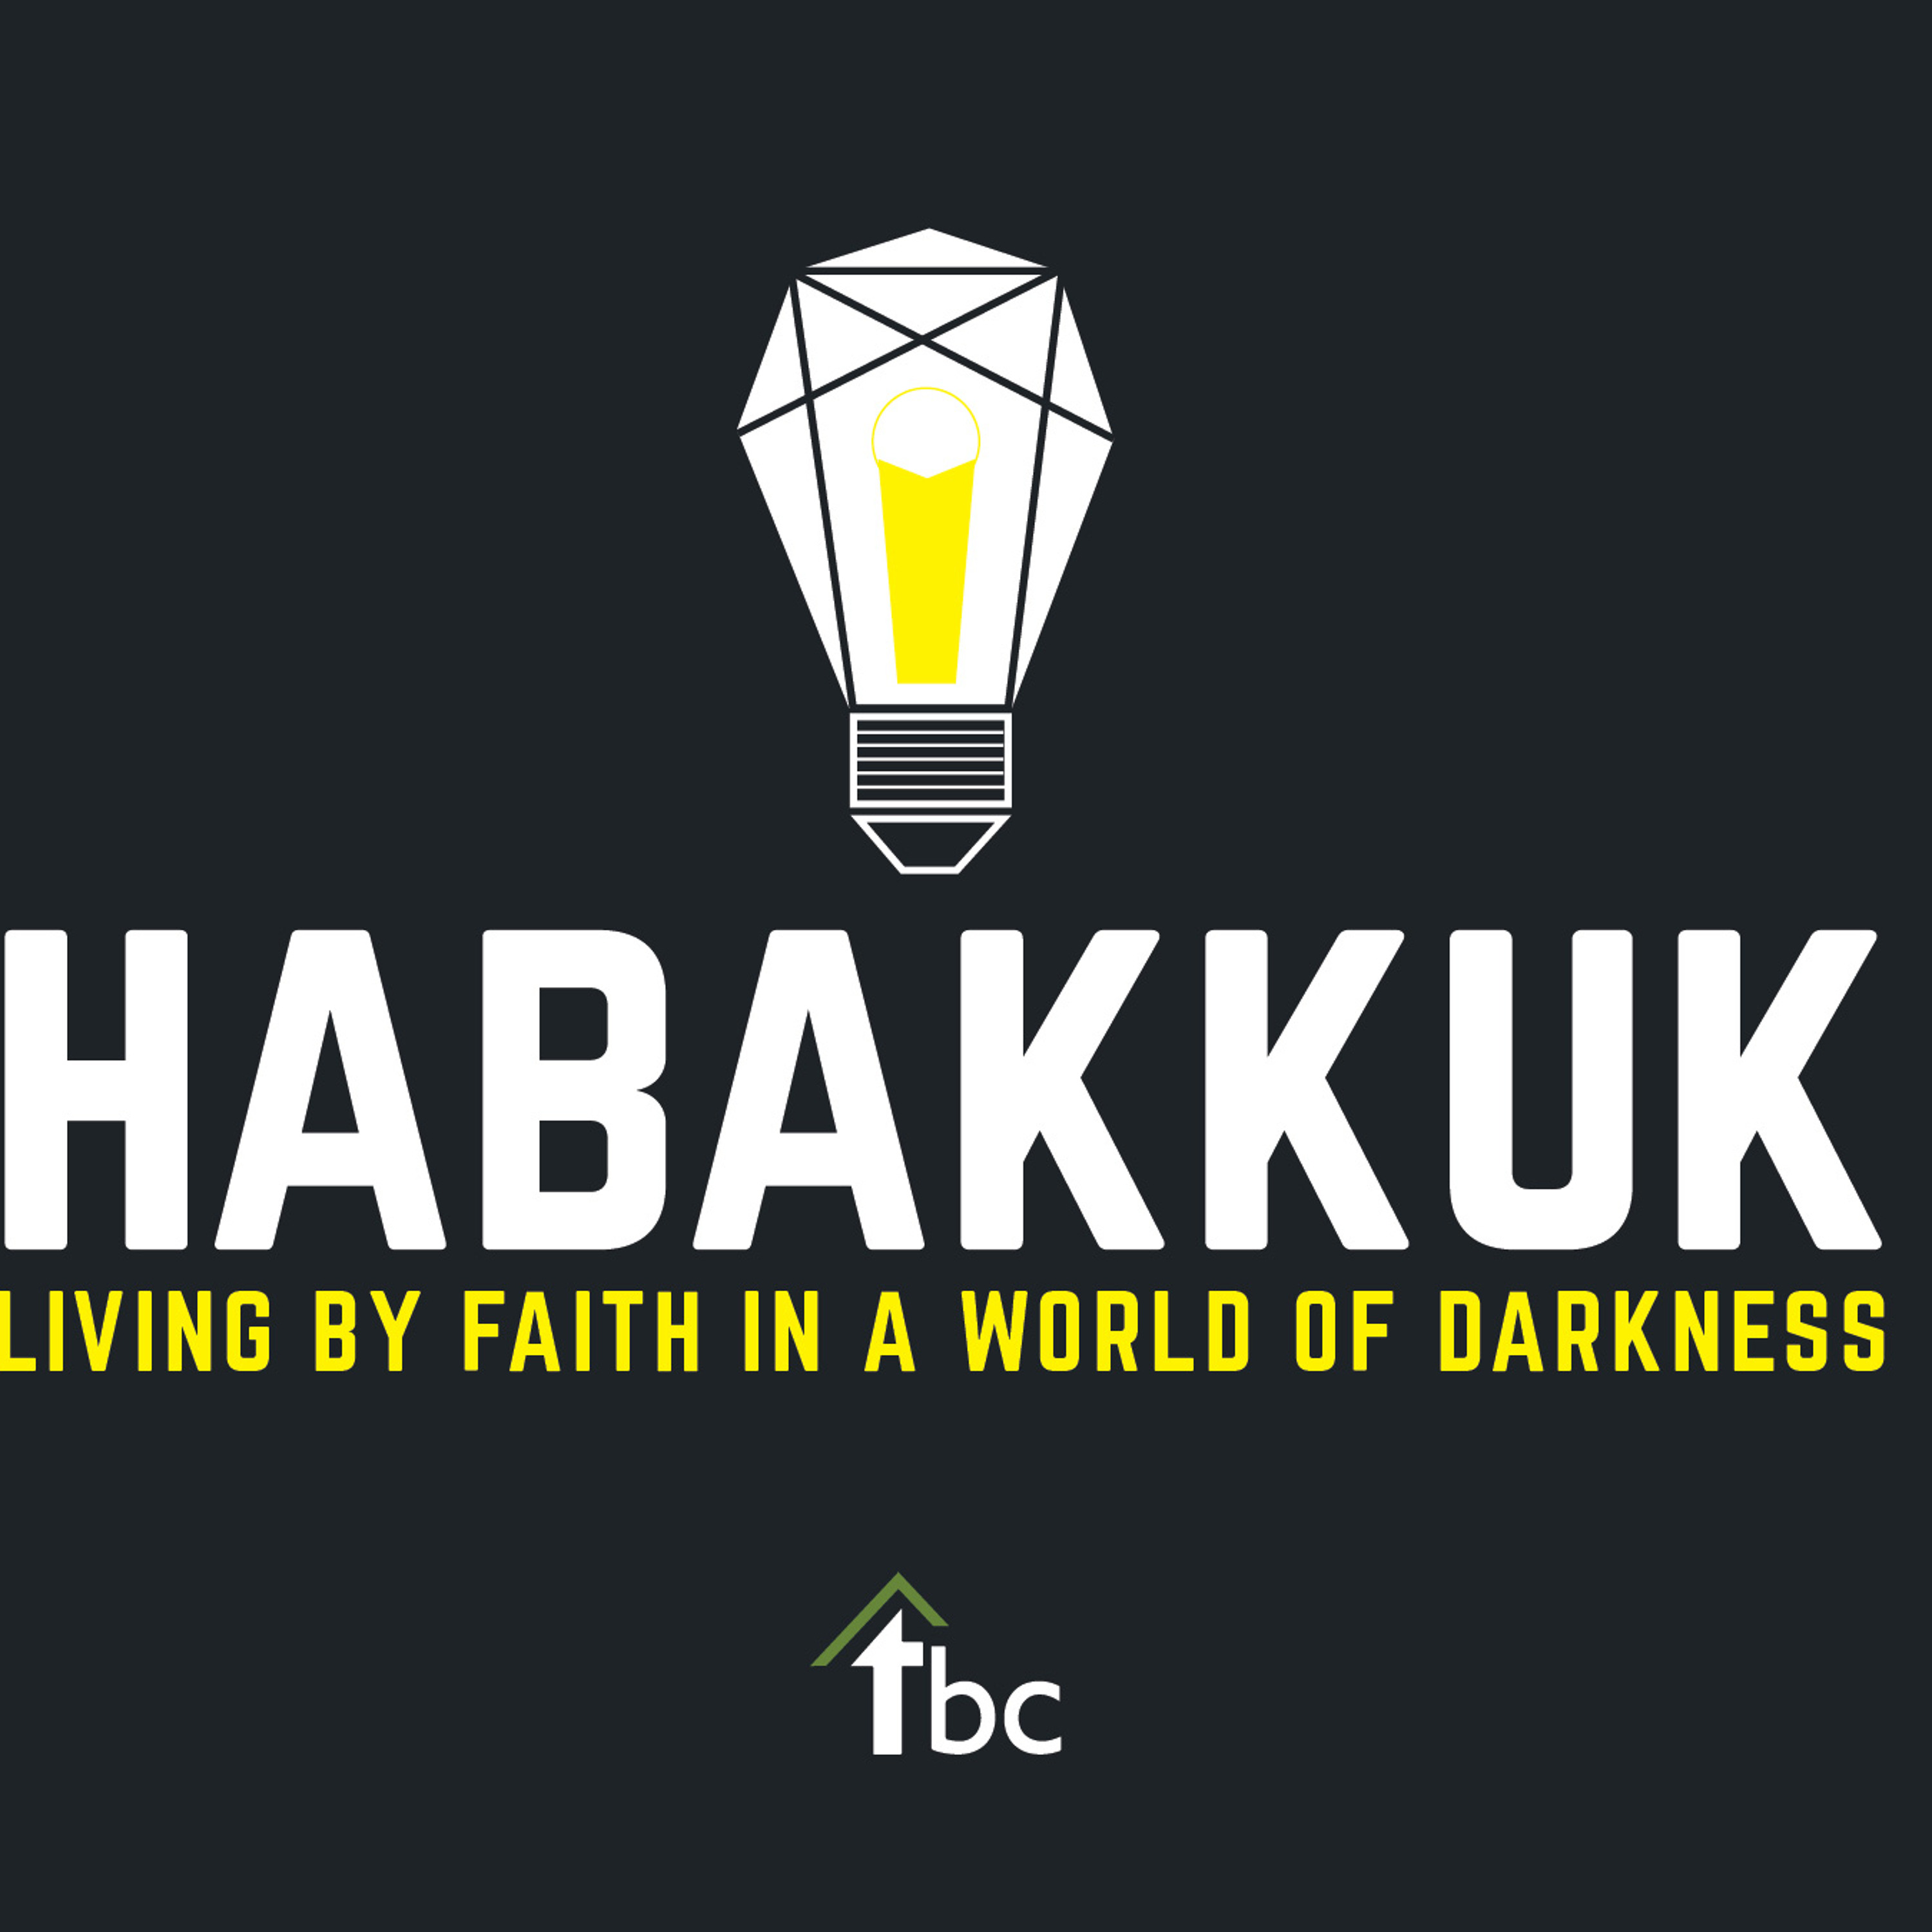 The Righteous Live By Faith (Habakkuk 2:2-4)